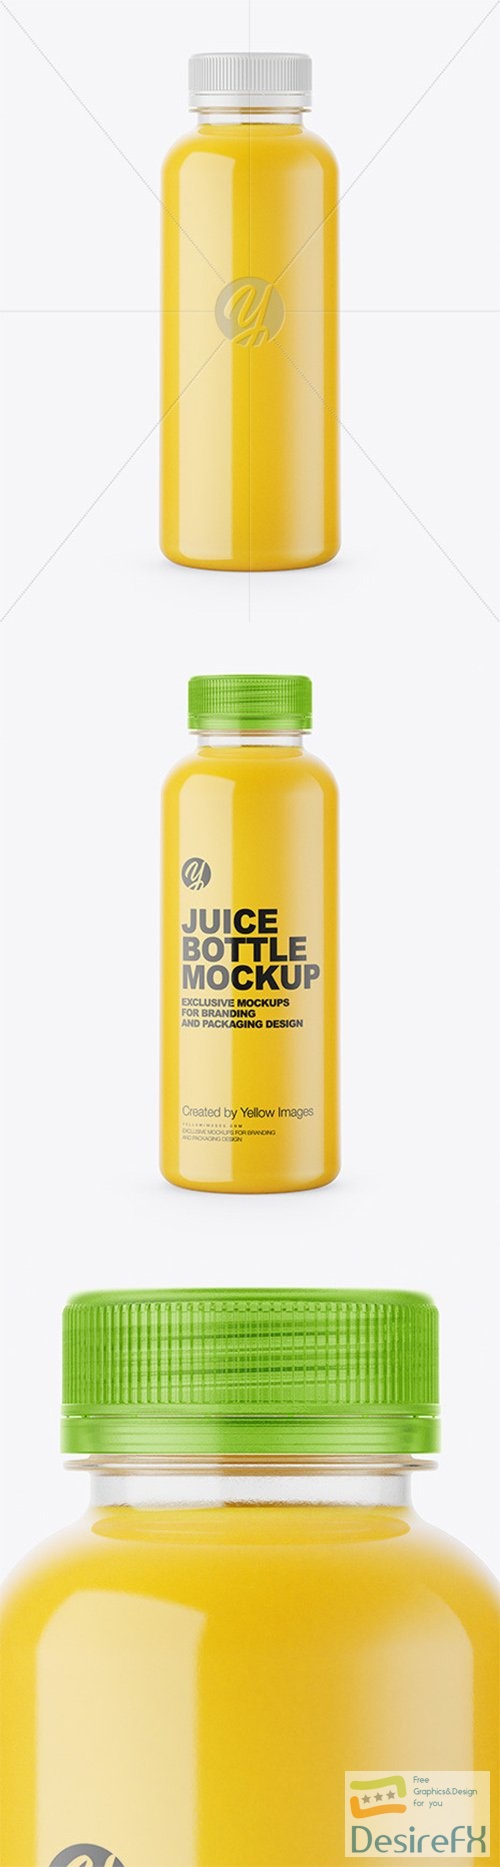 Clear Bottle with Orange Juice Mockup 82132 TIF